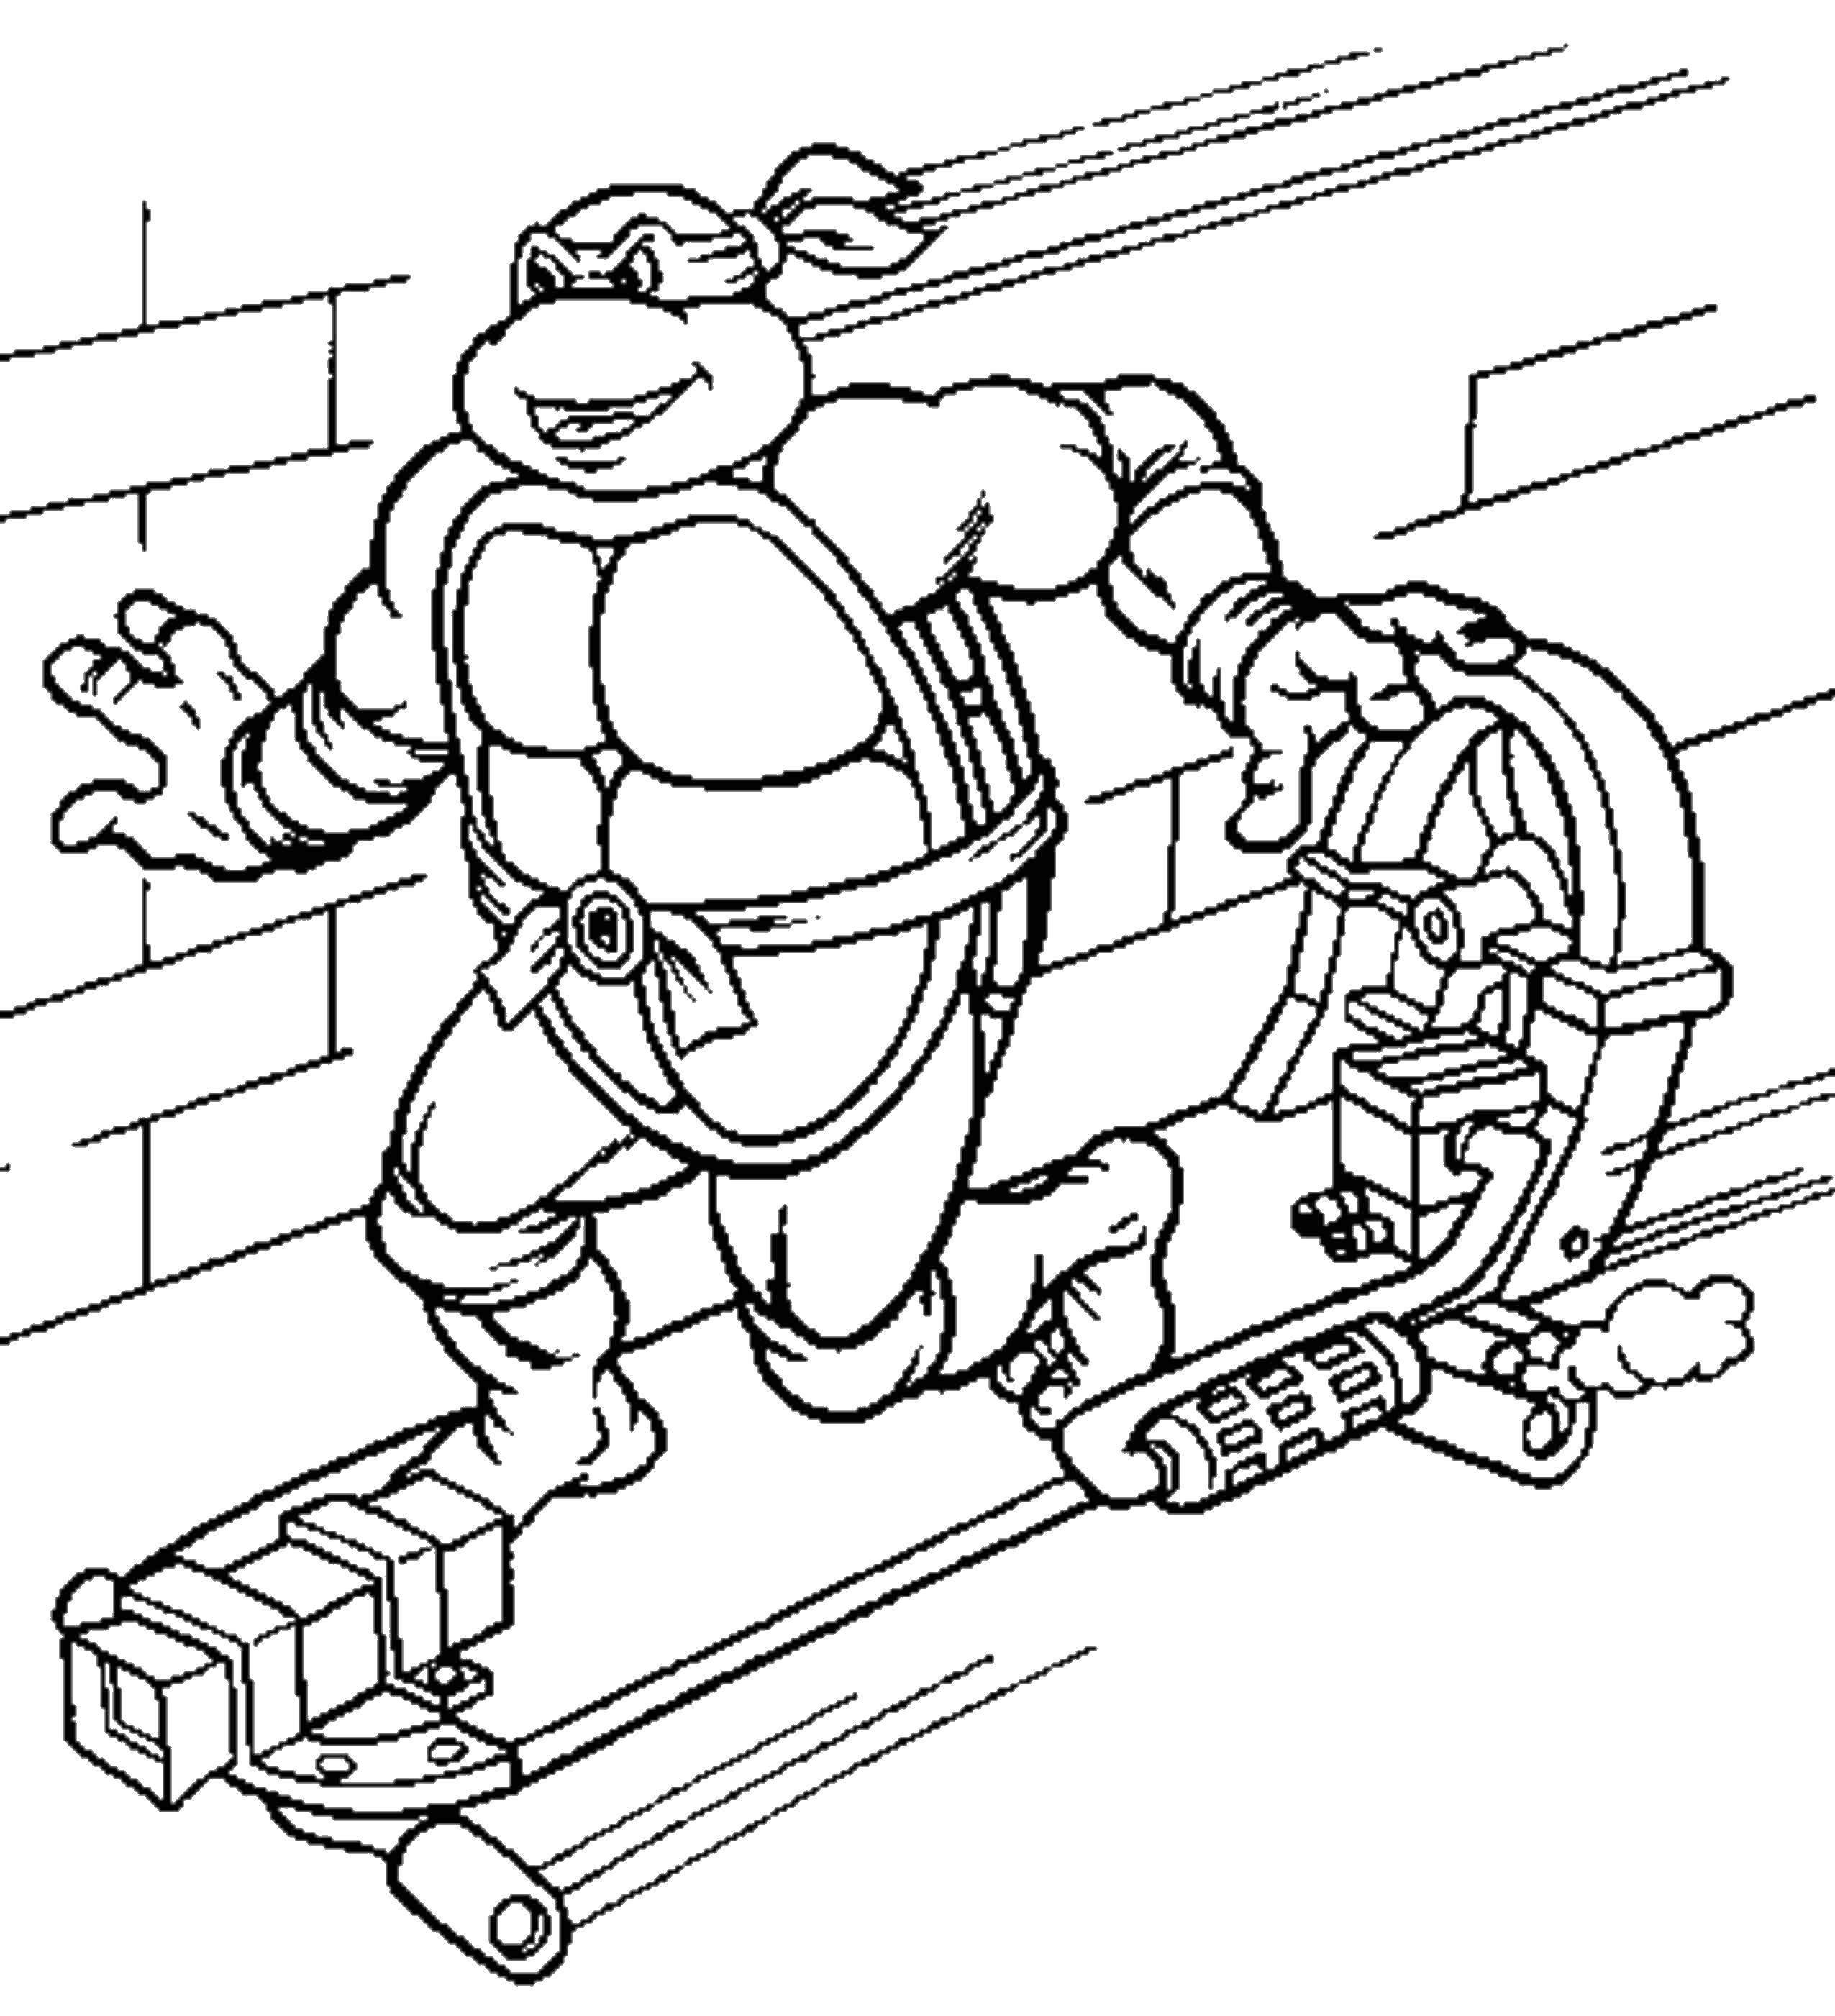 Coloring Ninja turtle. Category teenage mutant ninja turtles. Tags:  Comics, Teenage Mutant Ninja Turtles.